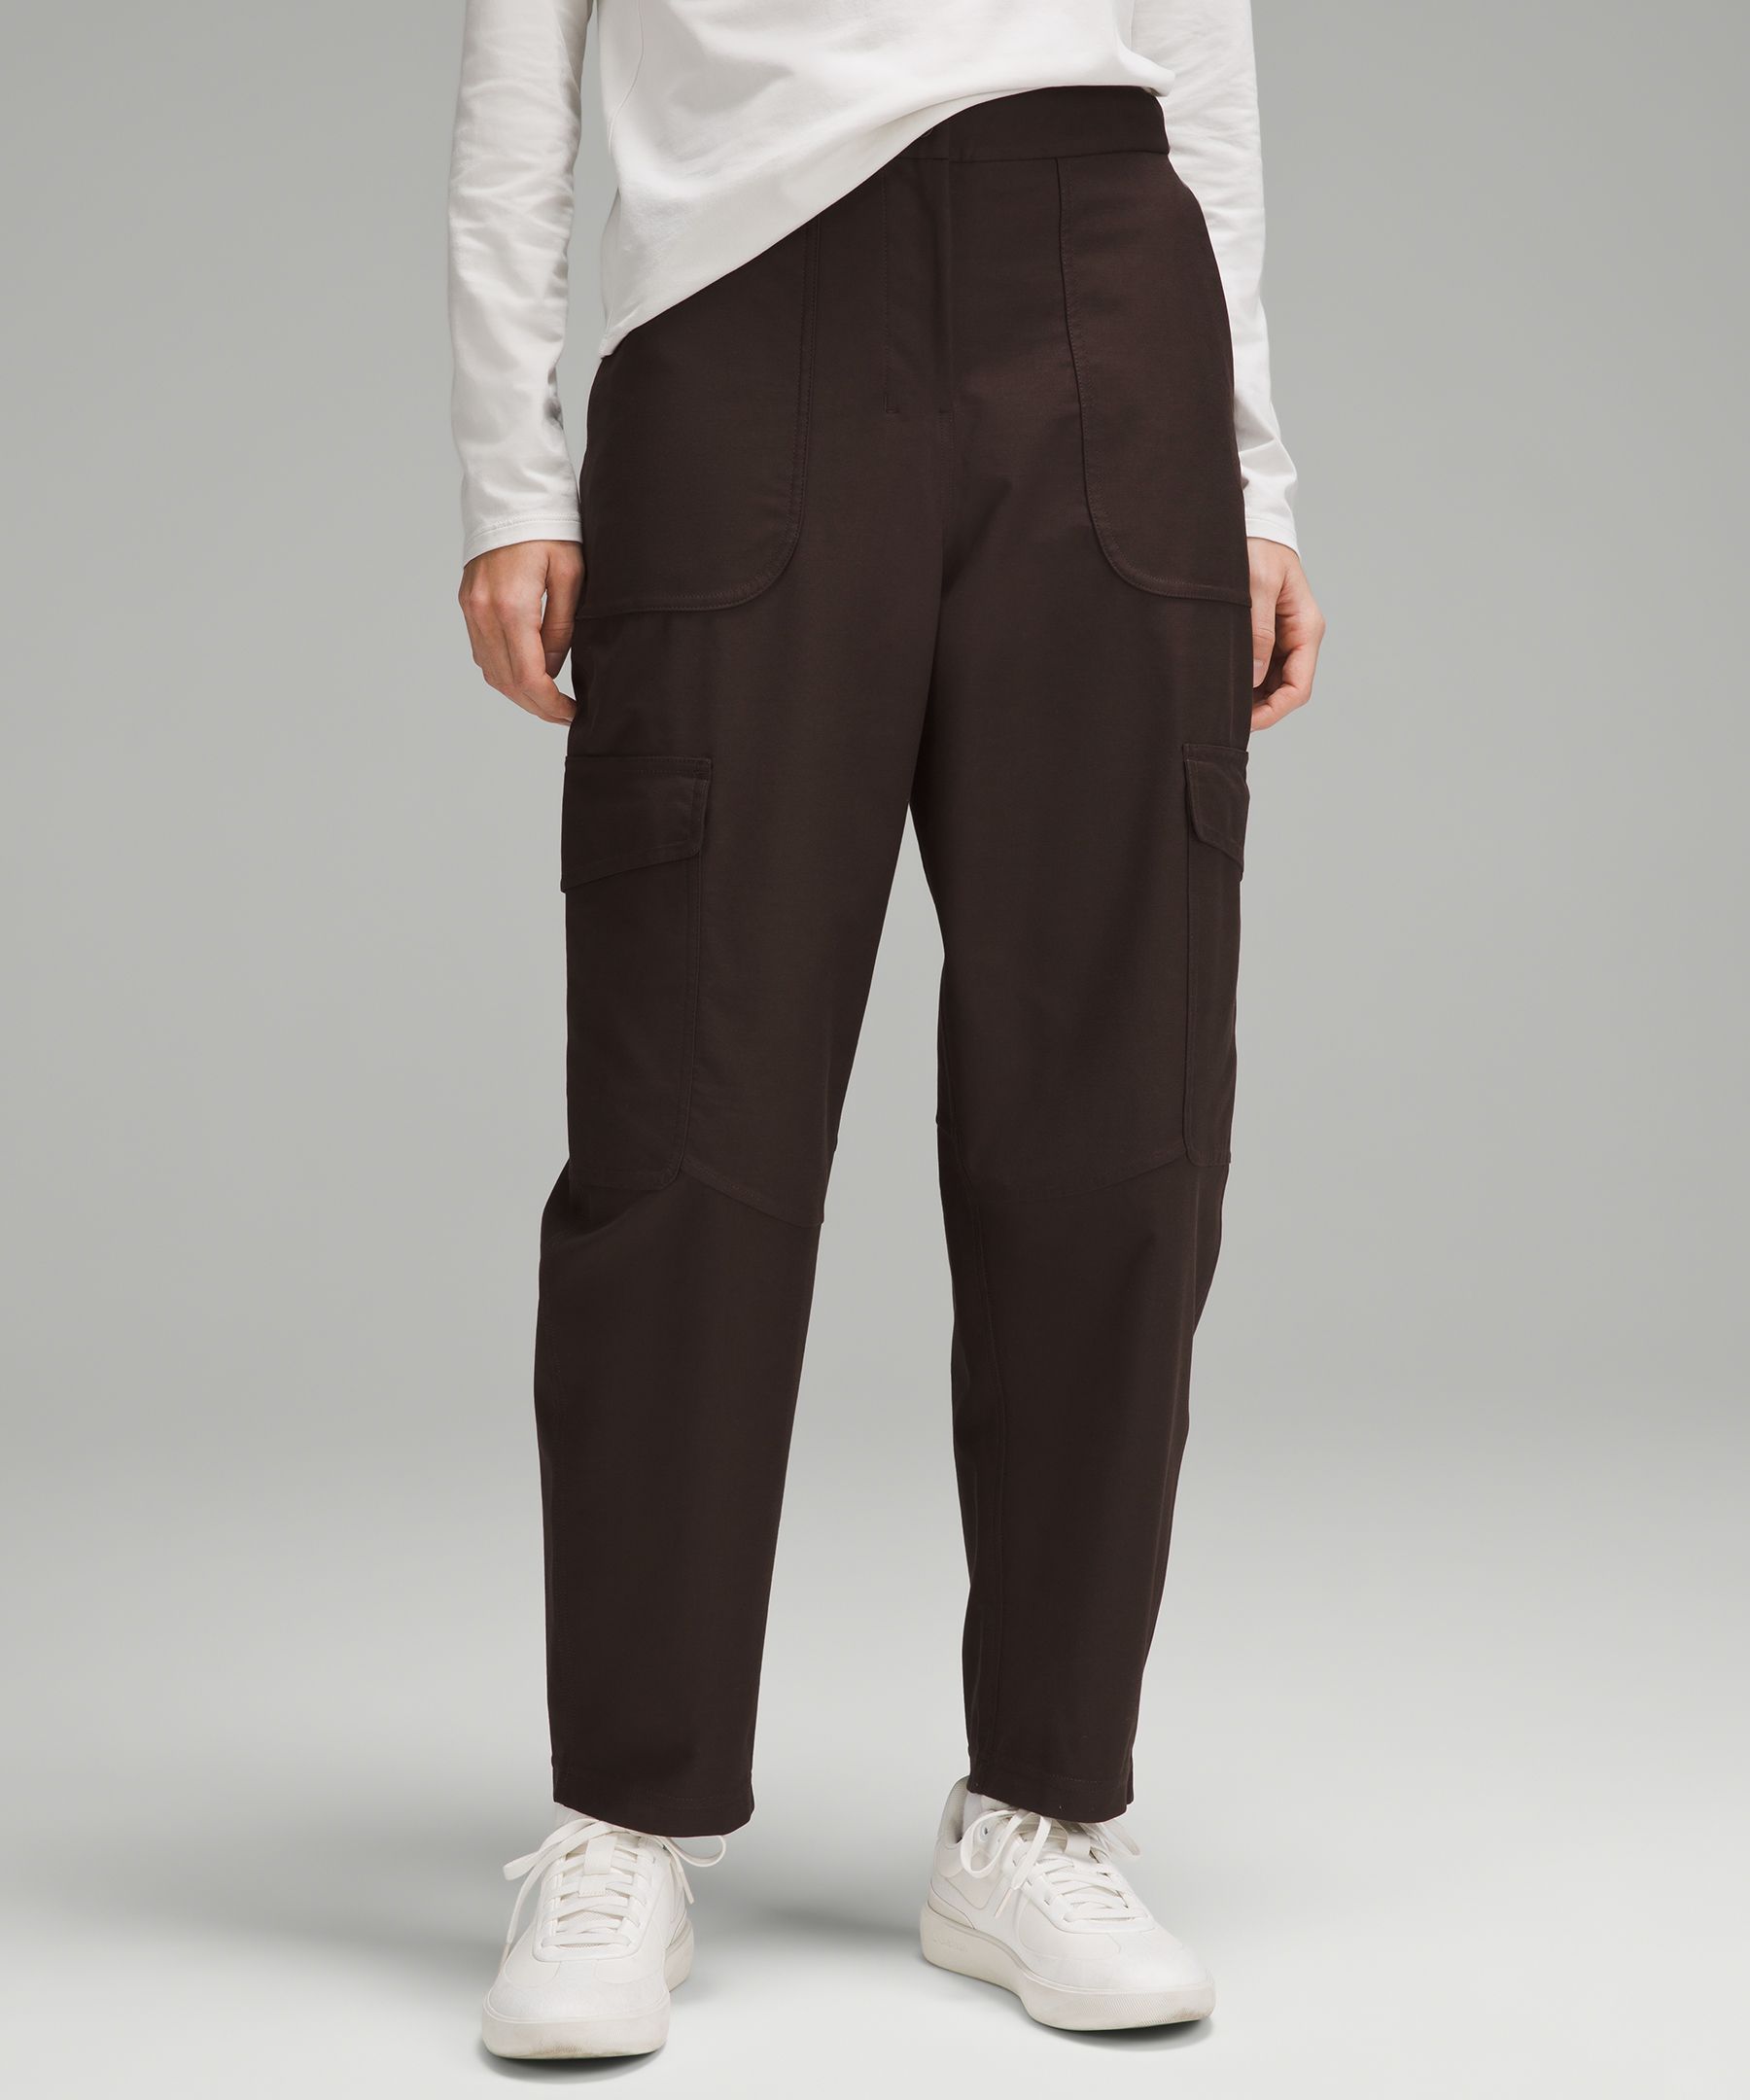 Lululemon Brown Light Utilitech Java Cargo Pocket High Rise Pants Size 26 -  $99 - From Madison